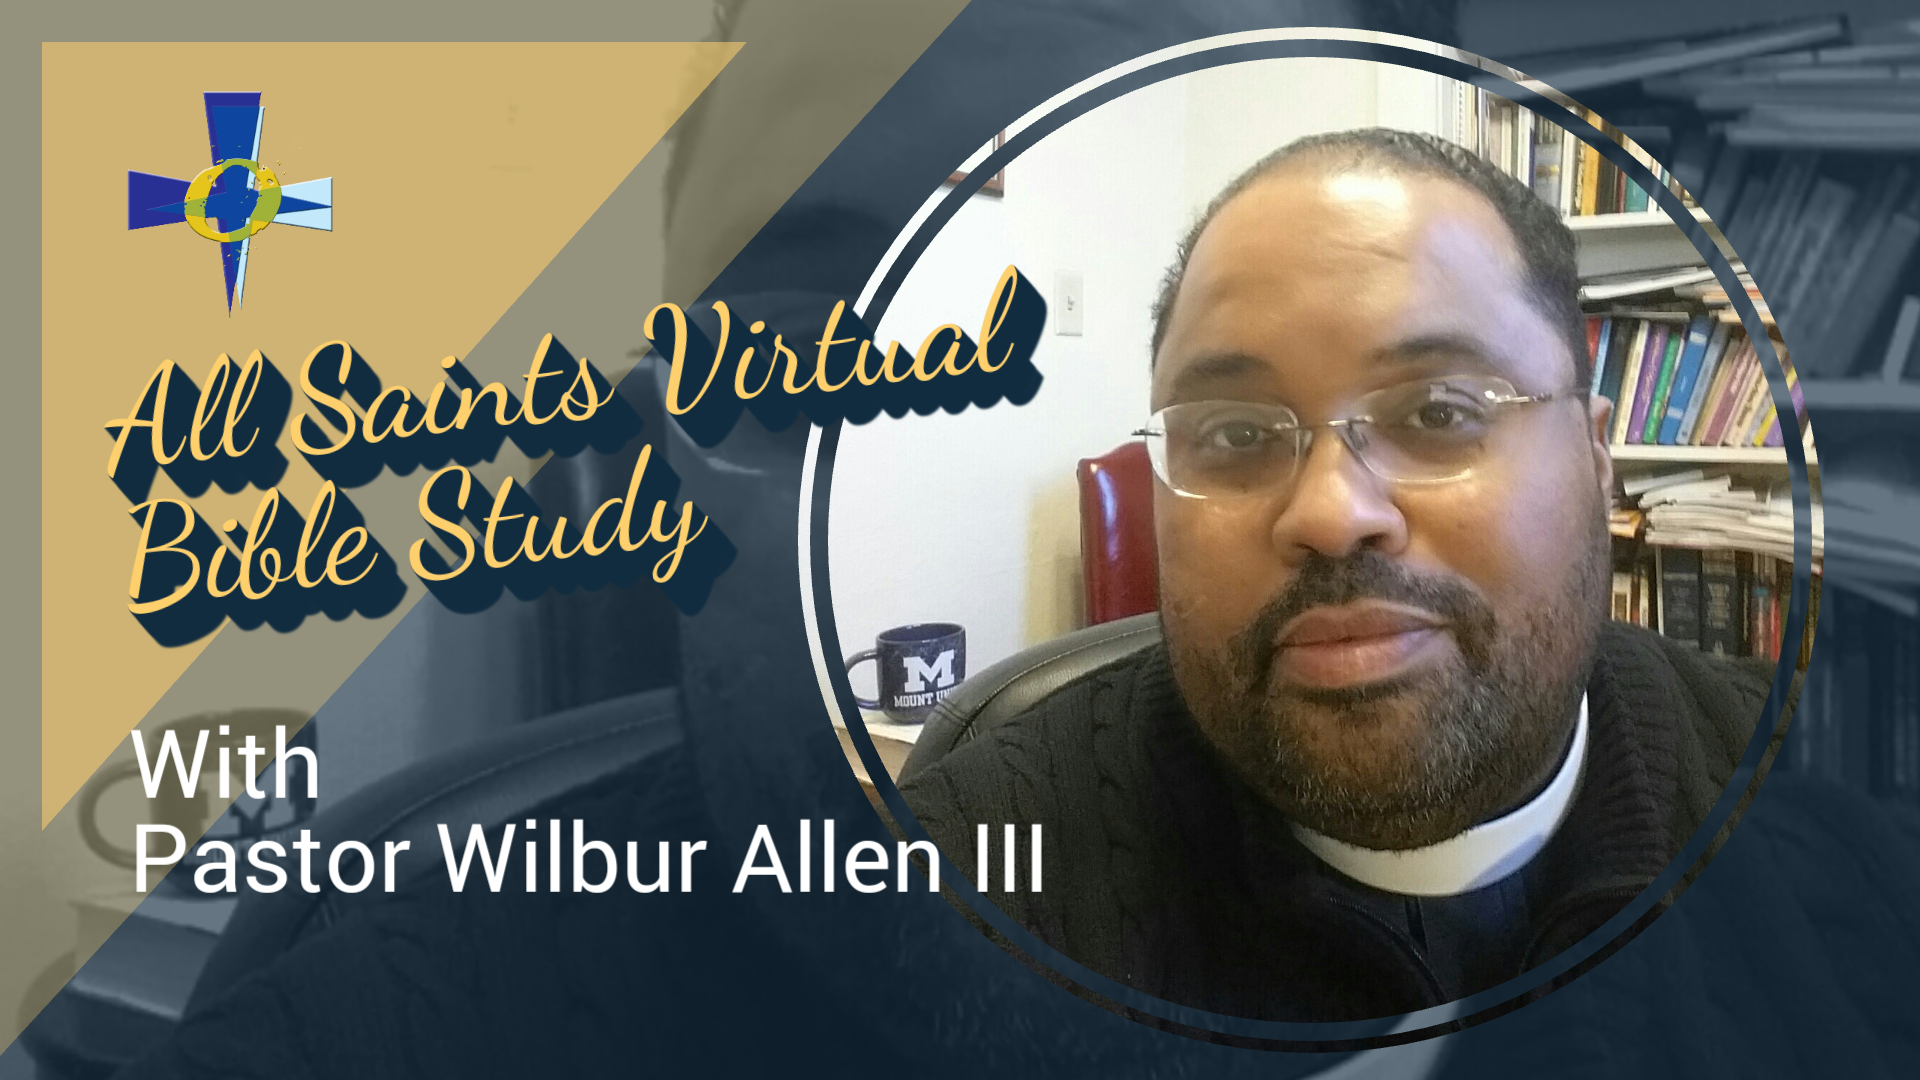 All Saints Virtual Bible Study - The Stand